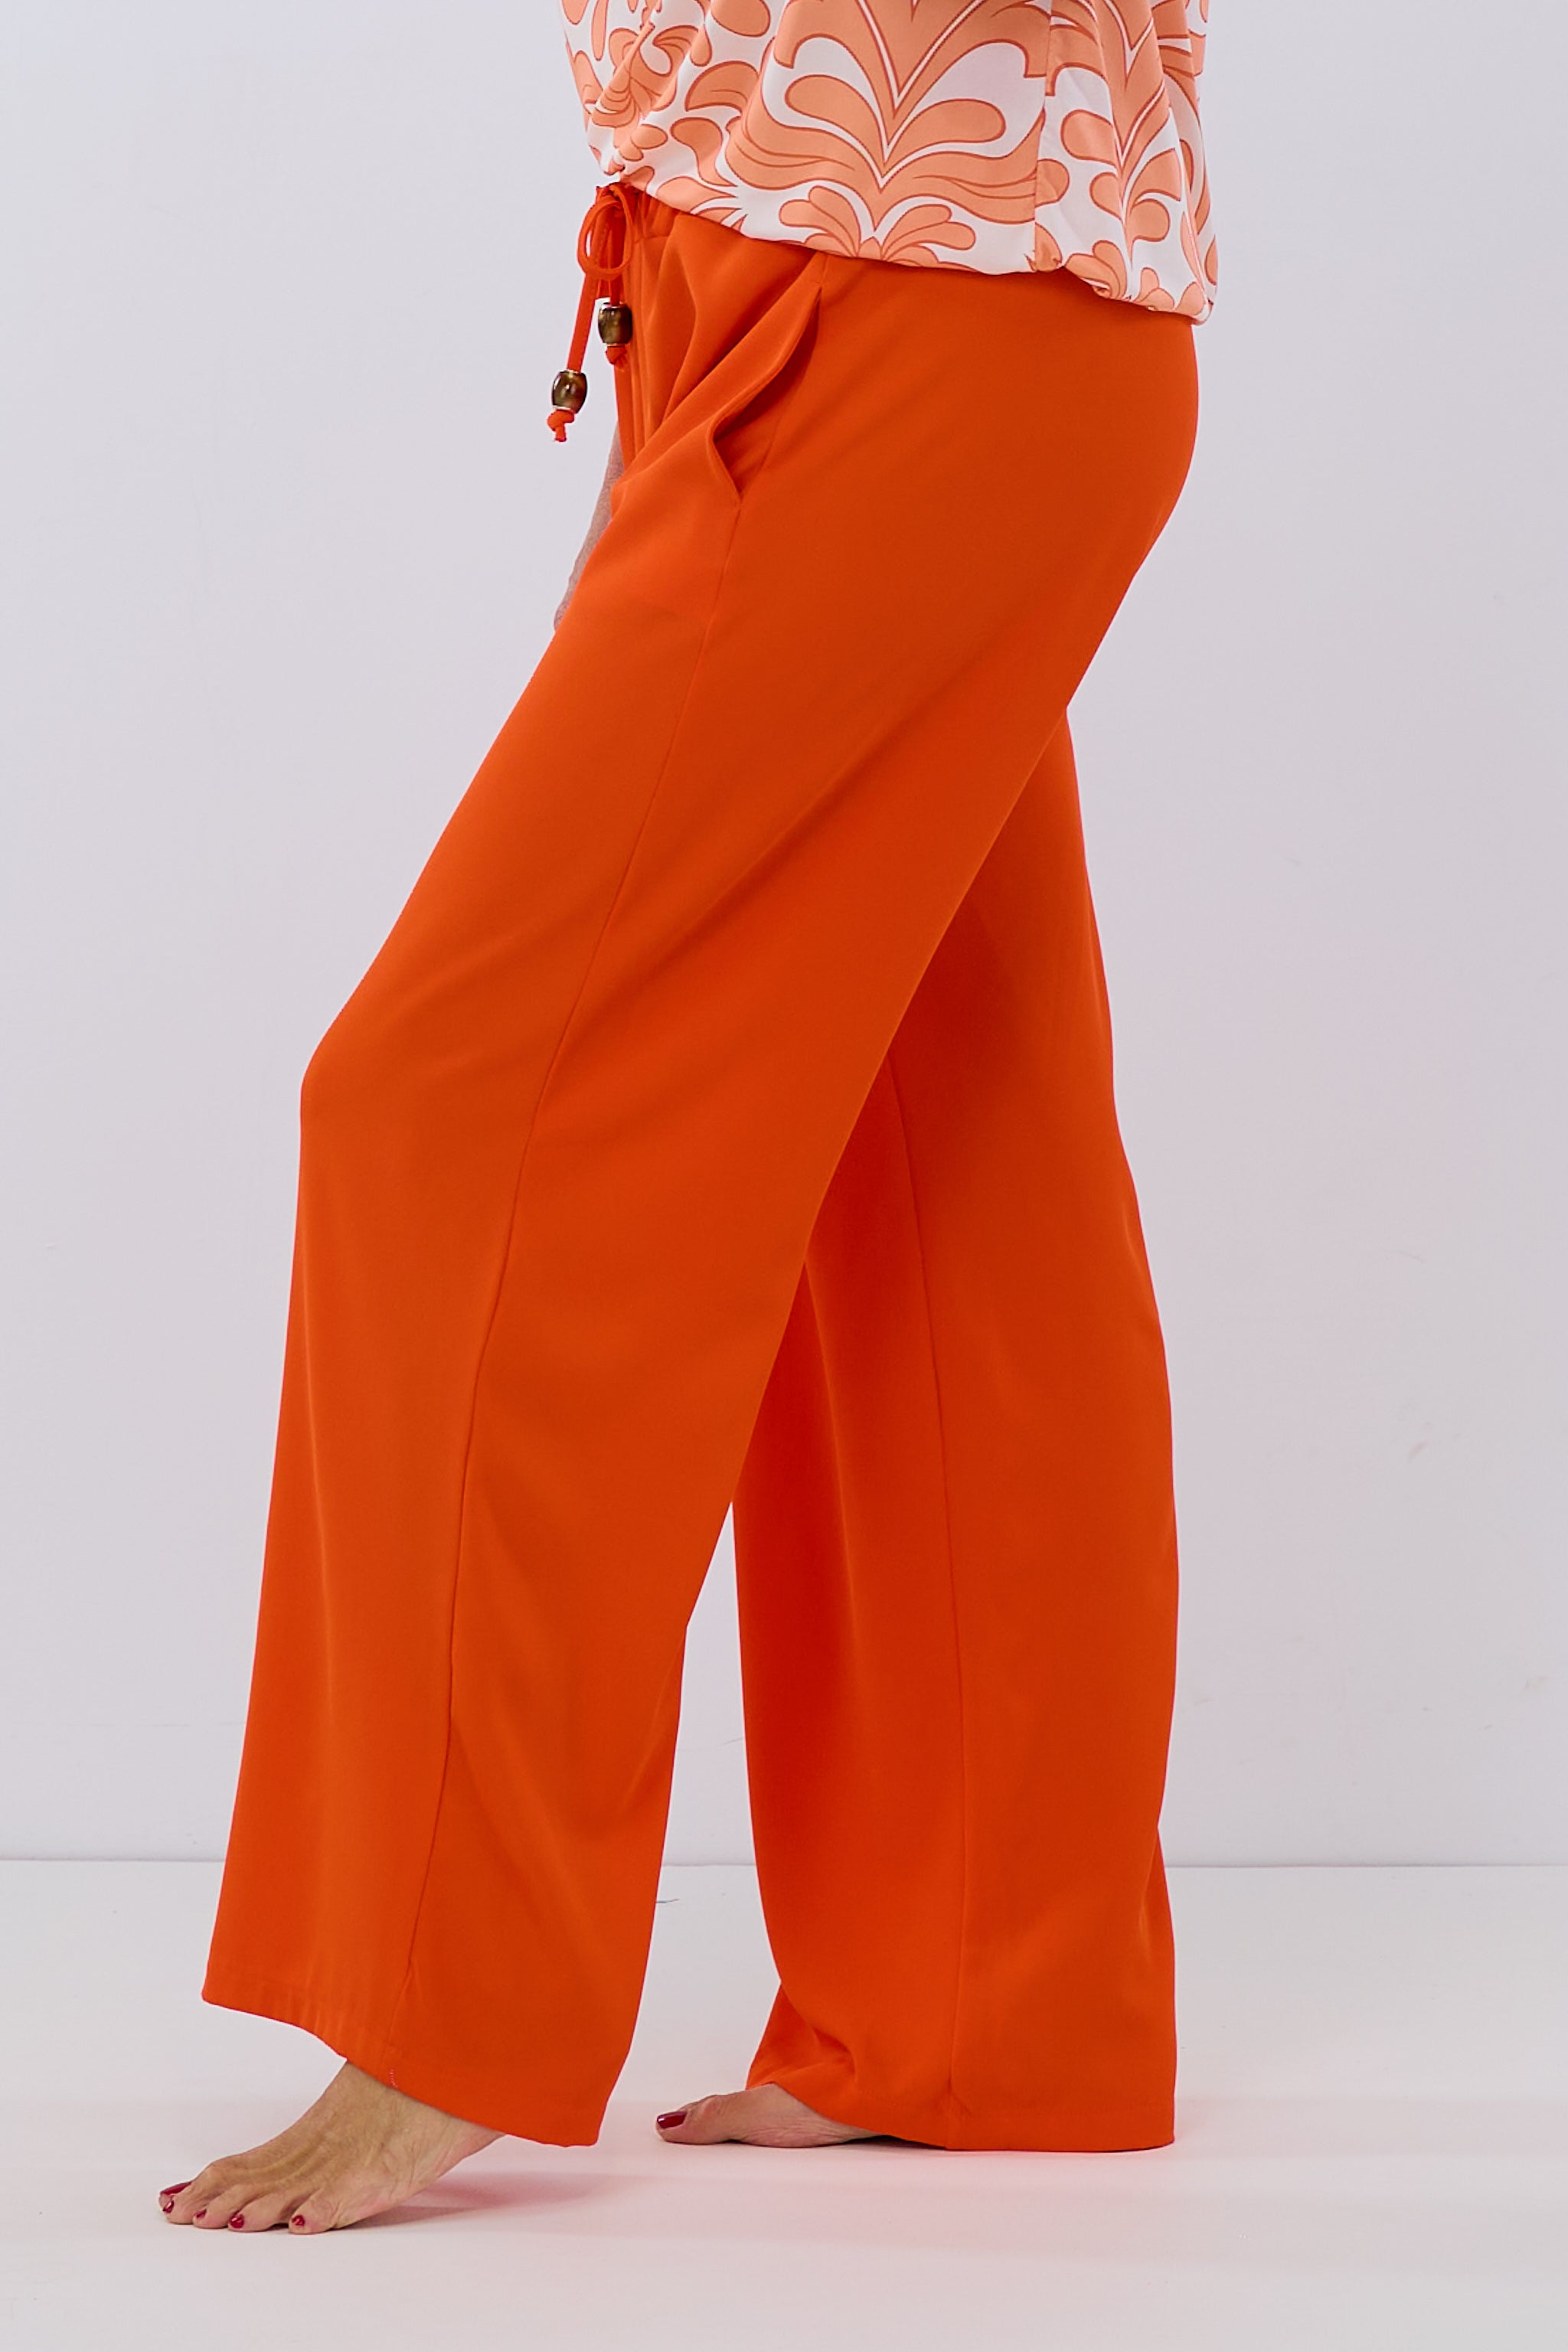 Damen Stoffhose orange Trends & Lifestyle